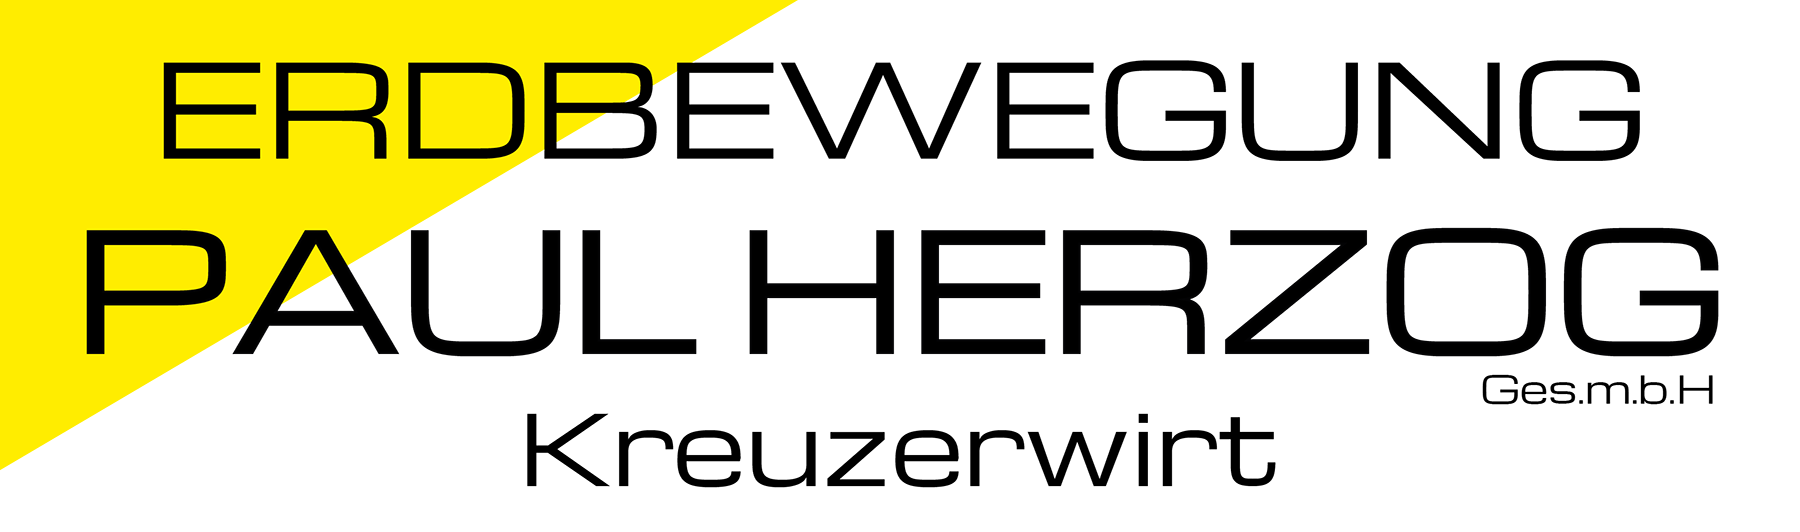 Erdbewegung Logo Sticky